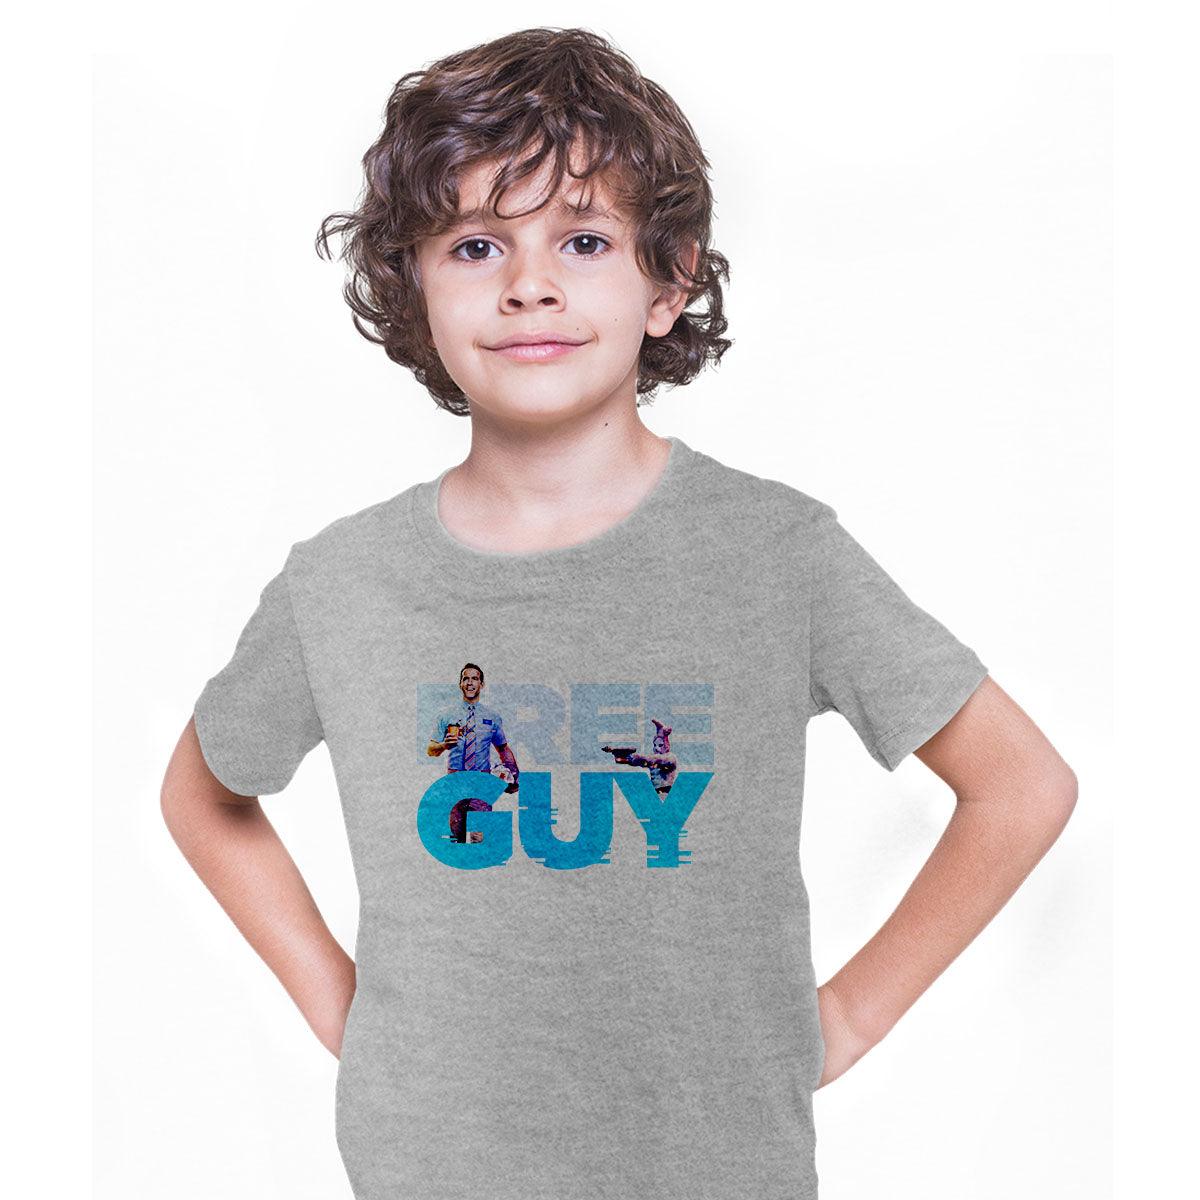 Free Guy Funny Movie Tee Typography T-shirt for Kids - Kuzi Tees